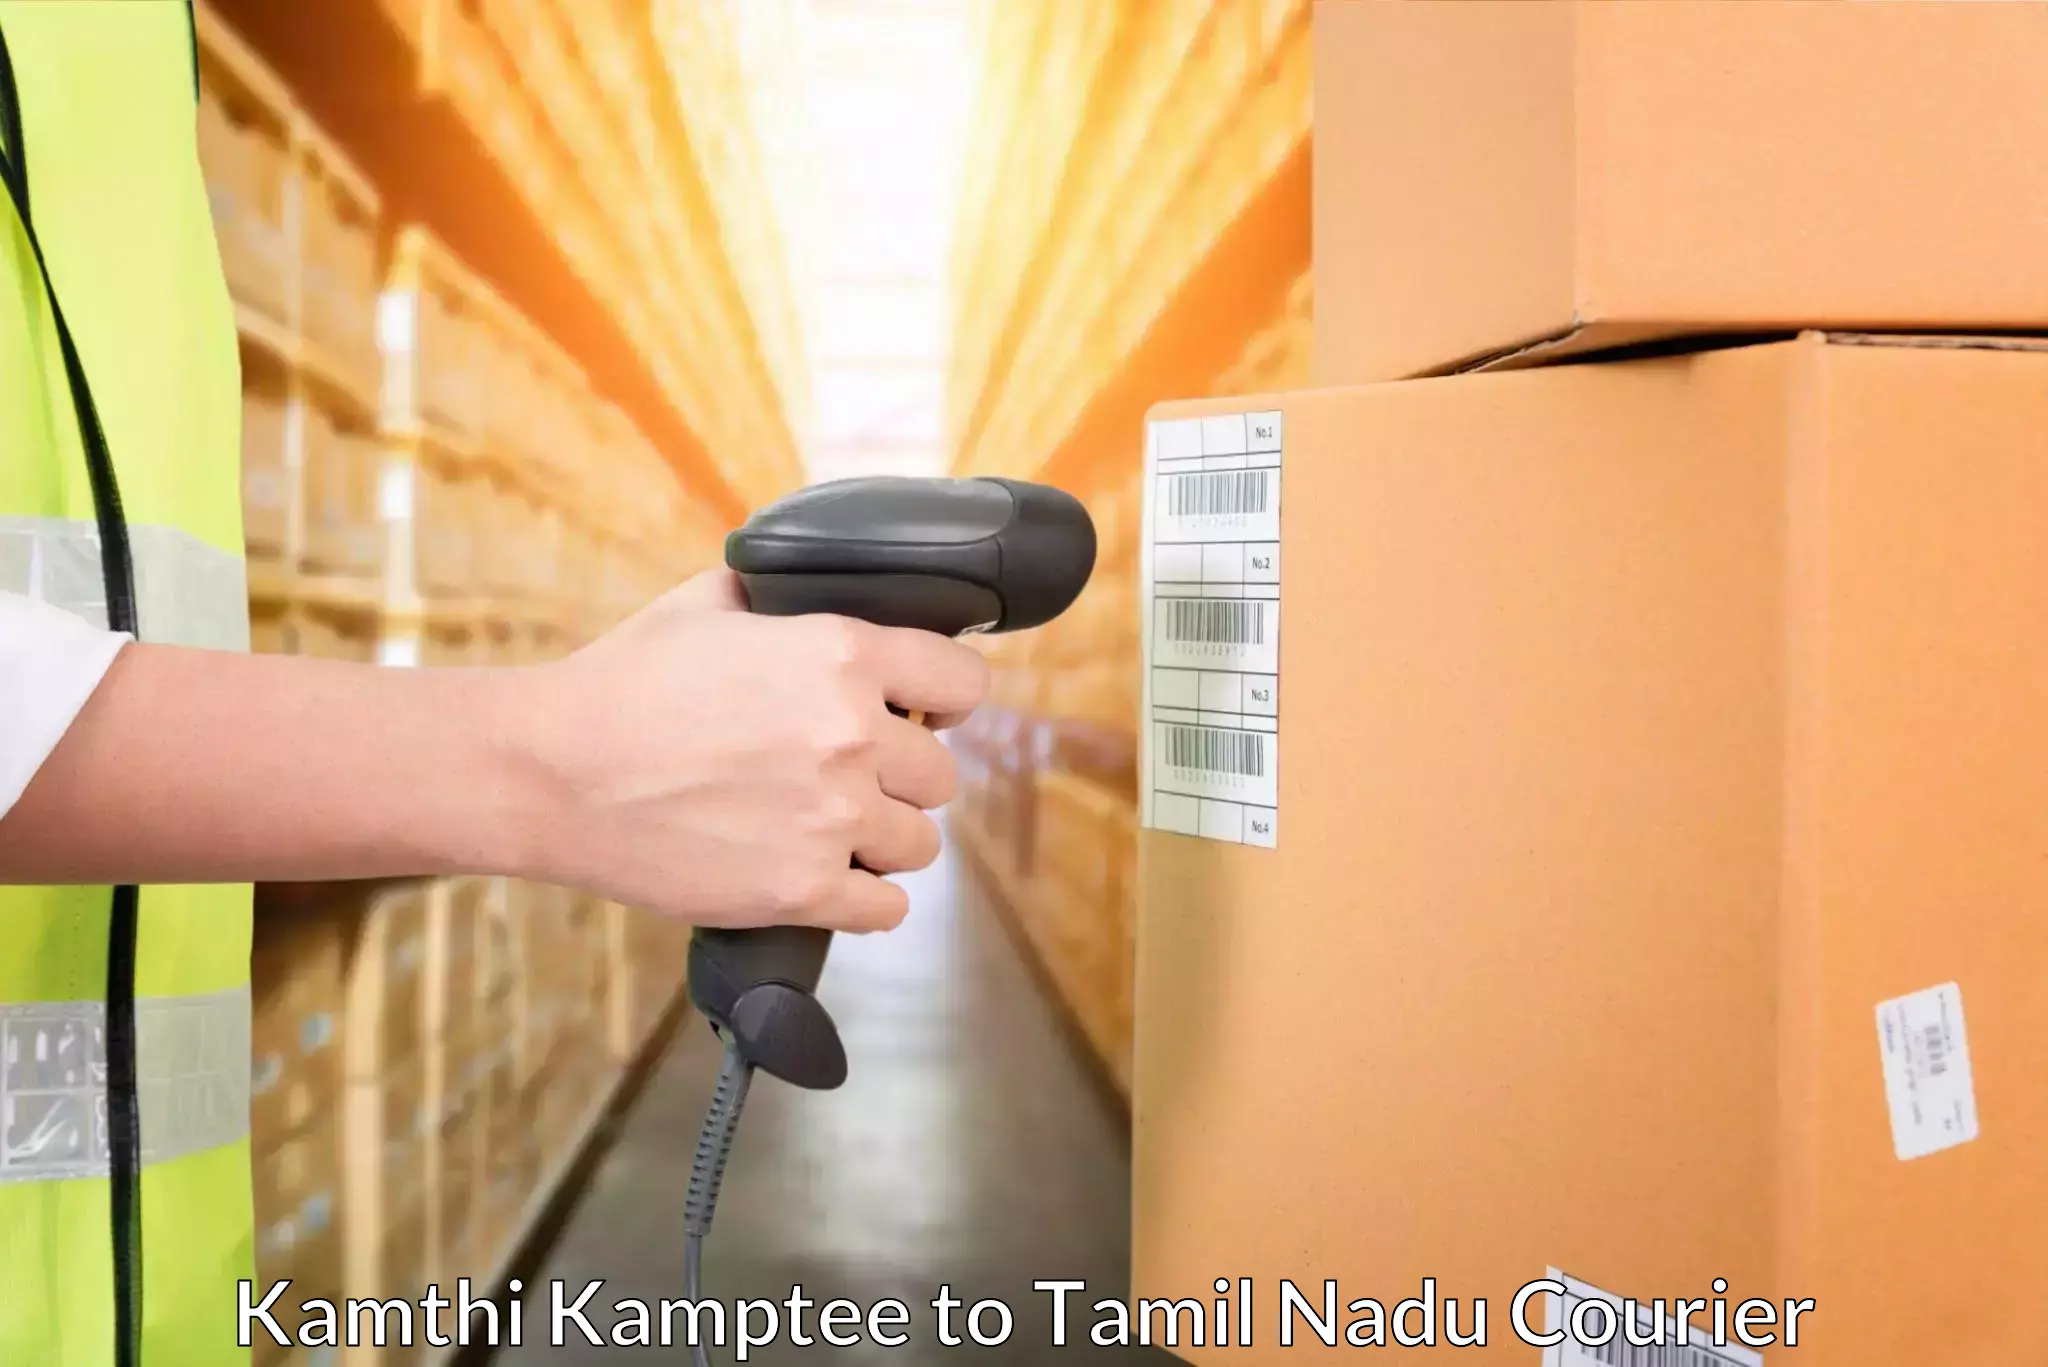 24/7 courier service Kamthi Kamptee to Villupuram